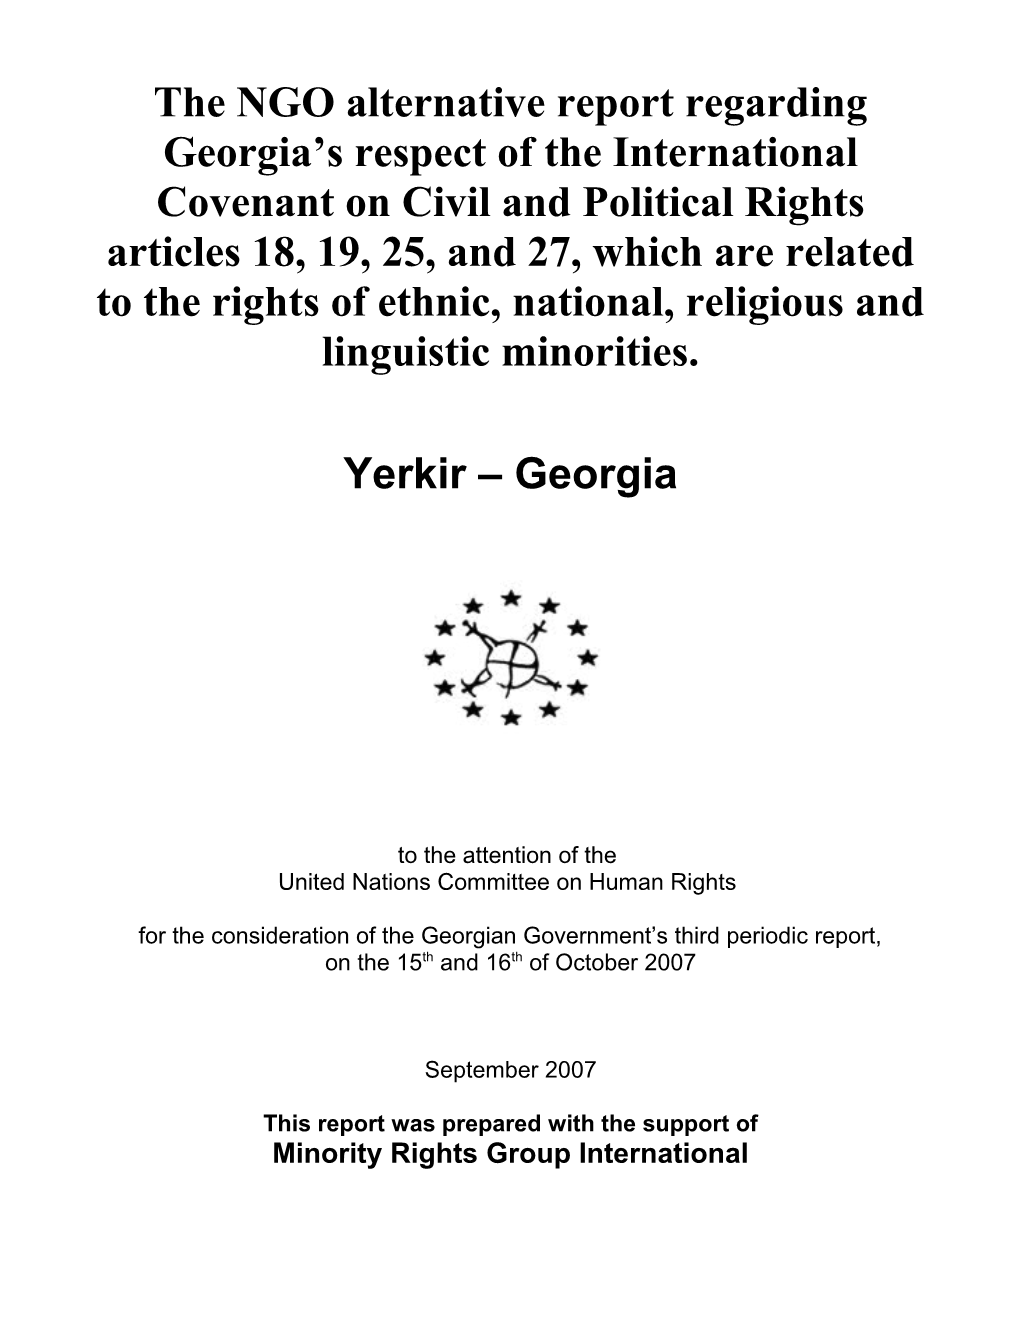 The NGO Alternative Report Regarding Georgia S Respect of the International Covenant On